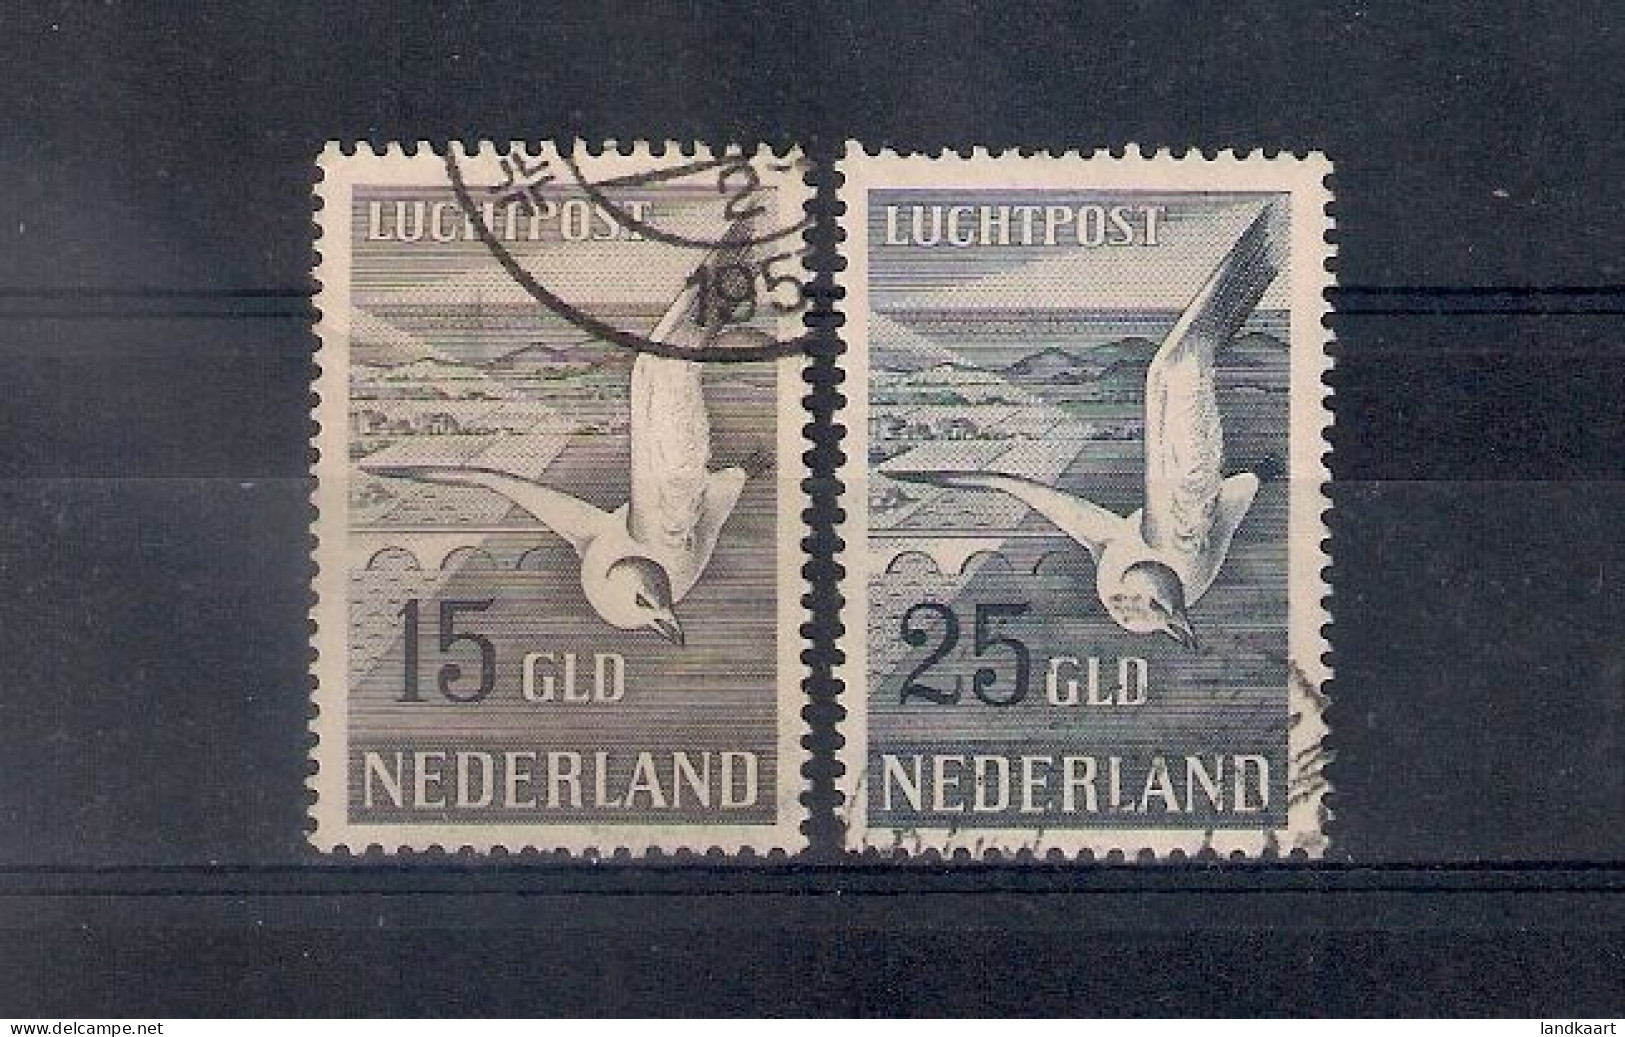 Netherlands 1951, NVPH LP Nr 12-13, Used - Correo Aéreo